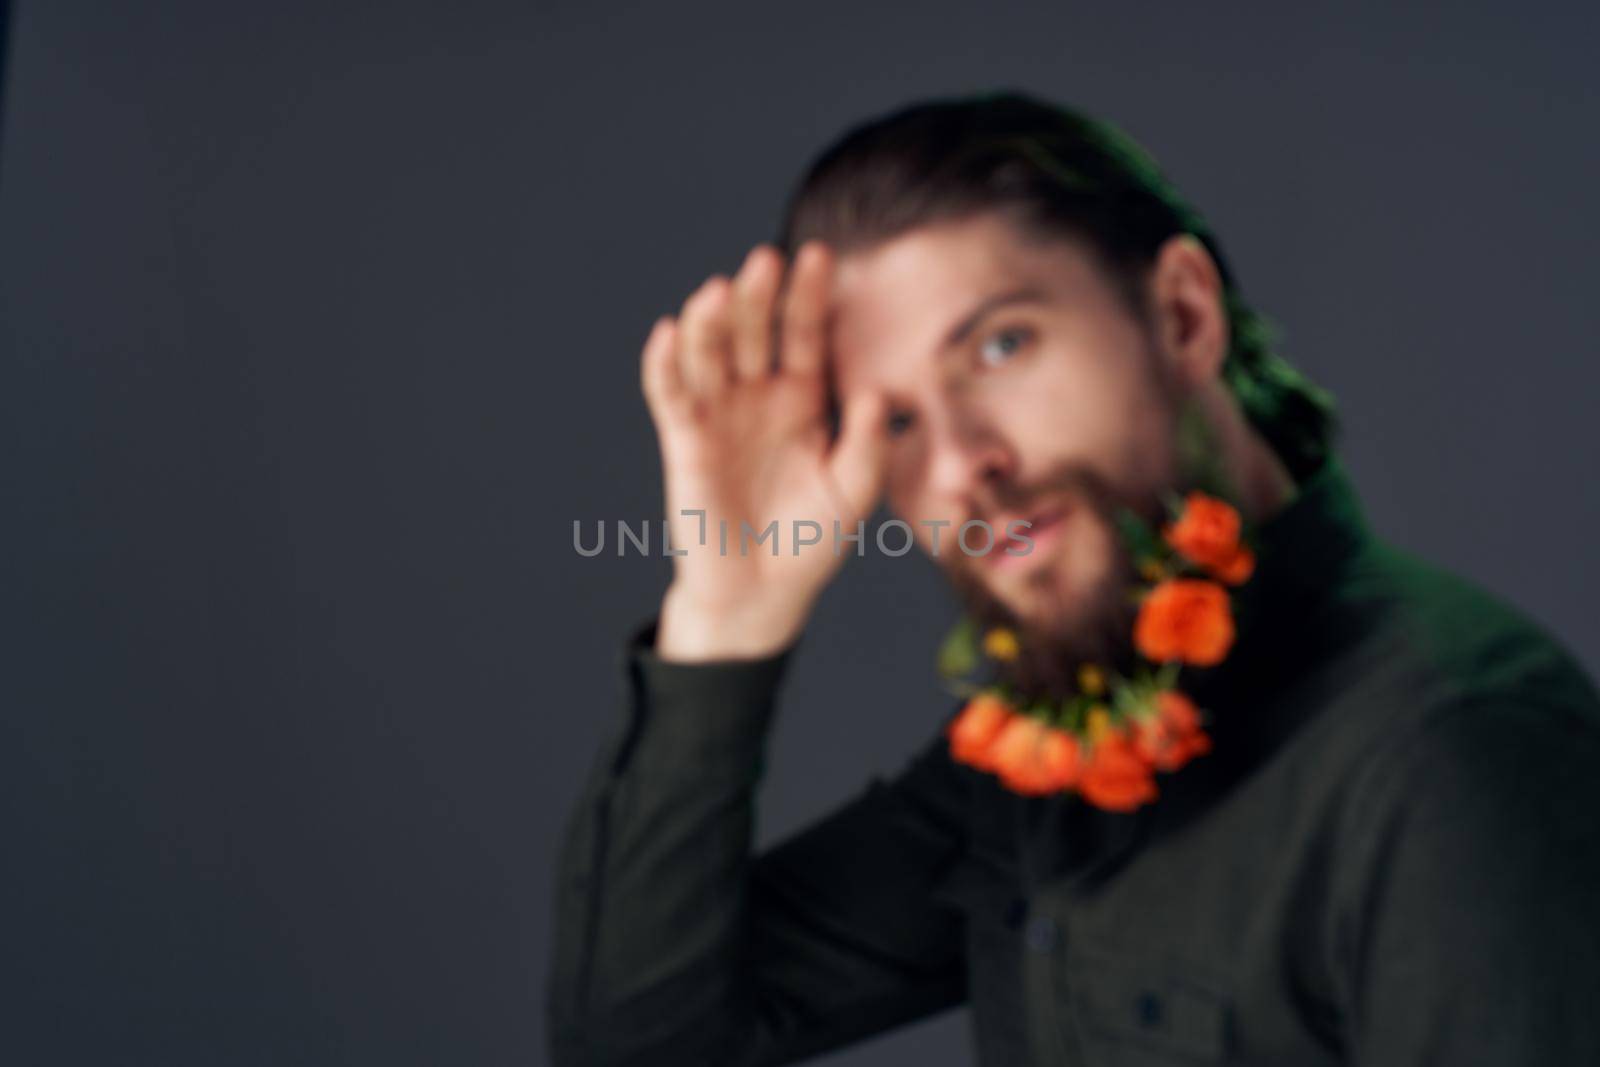 handsome man flowers in a beard decoration romance dark background by SHOTPRIME